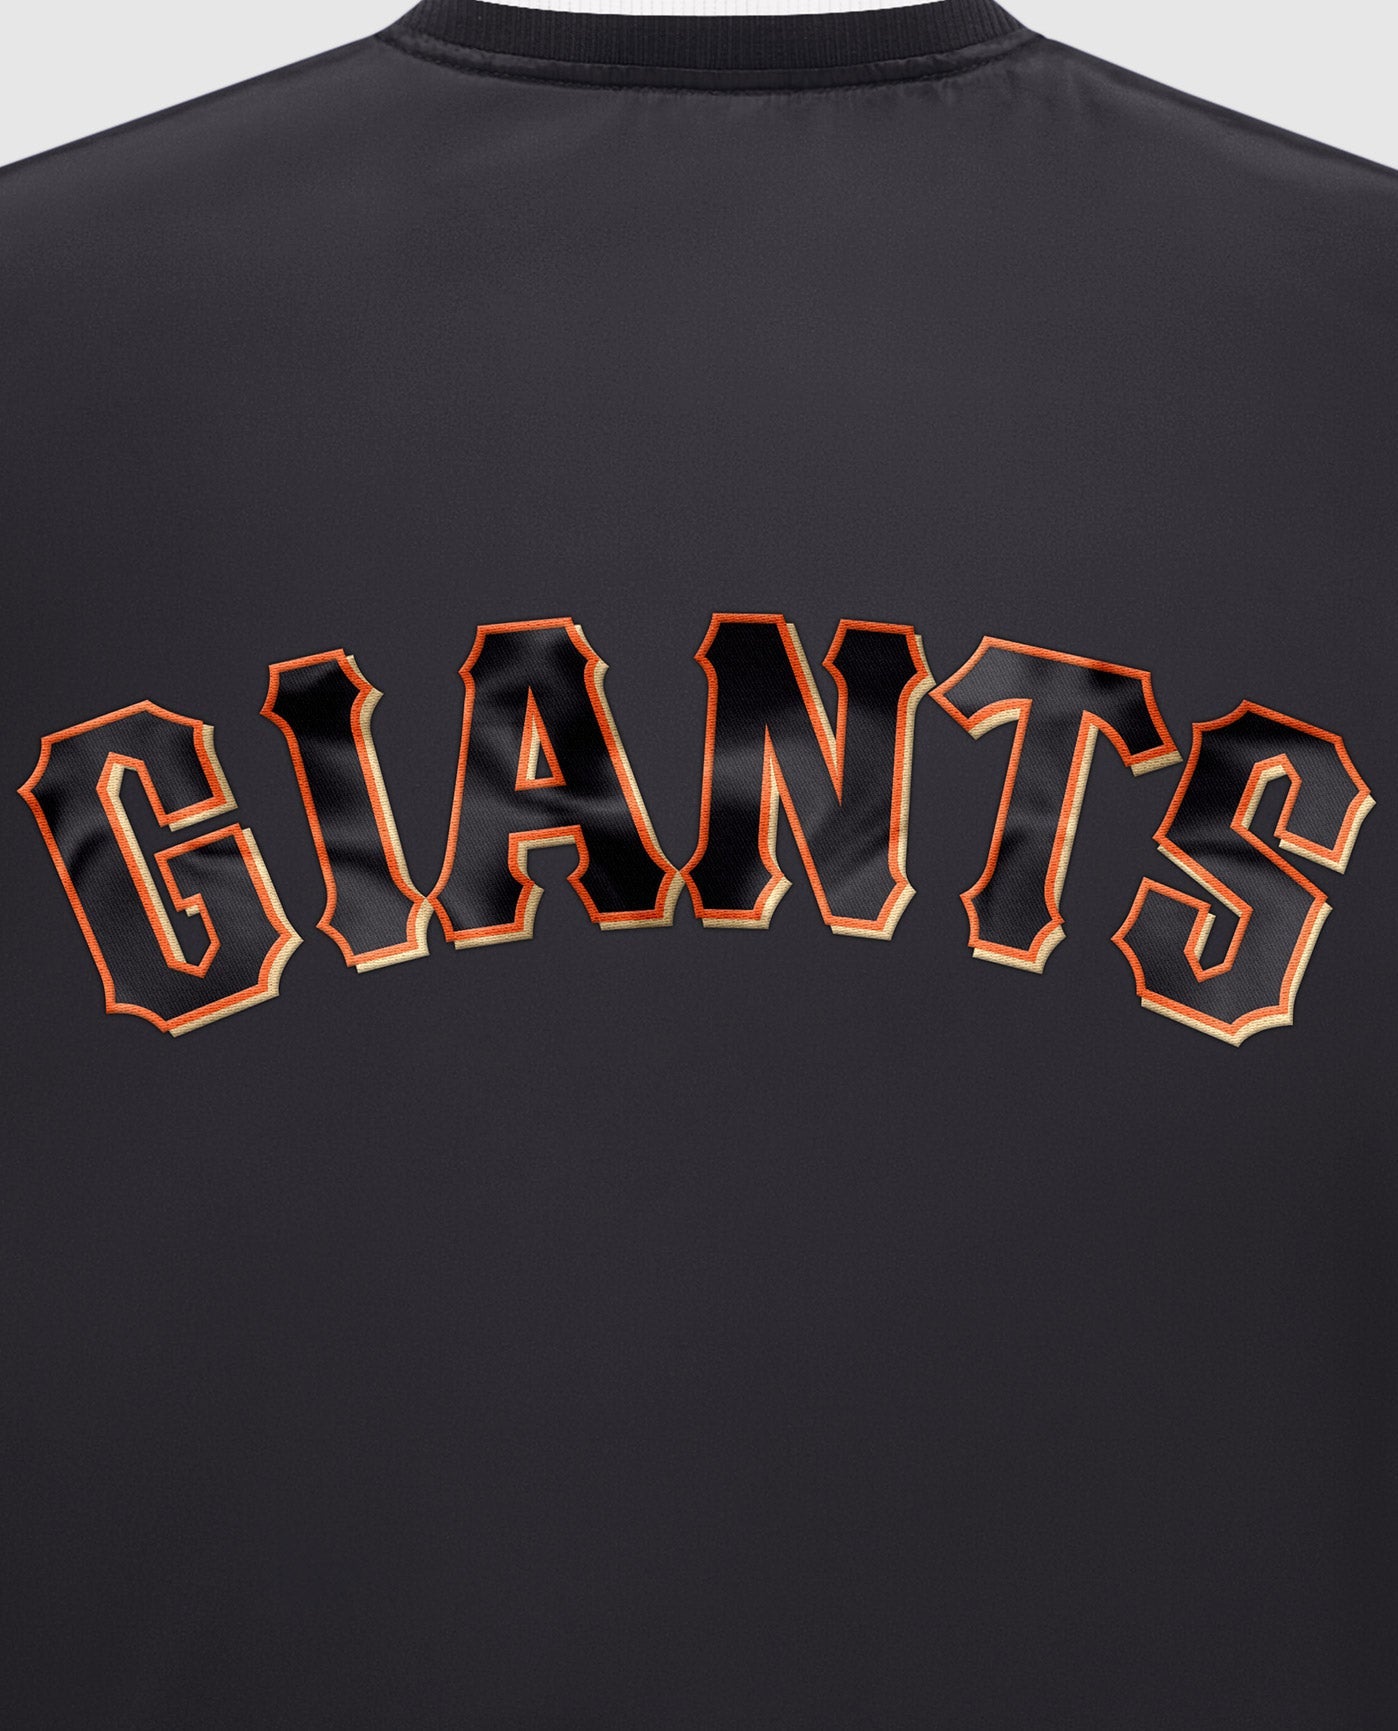 San Francisco Giants All Star Game Jacket